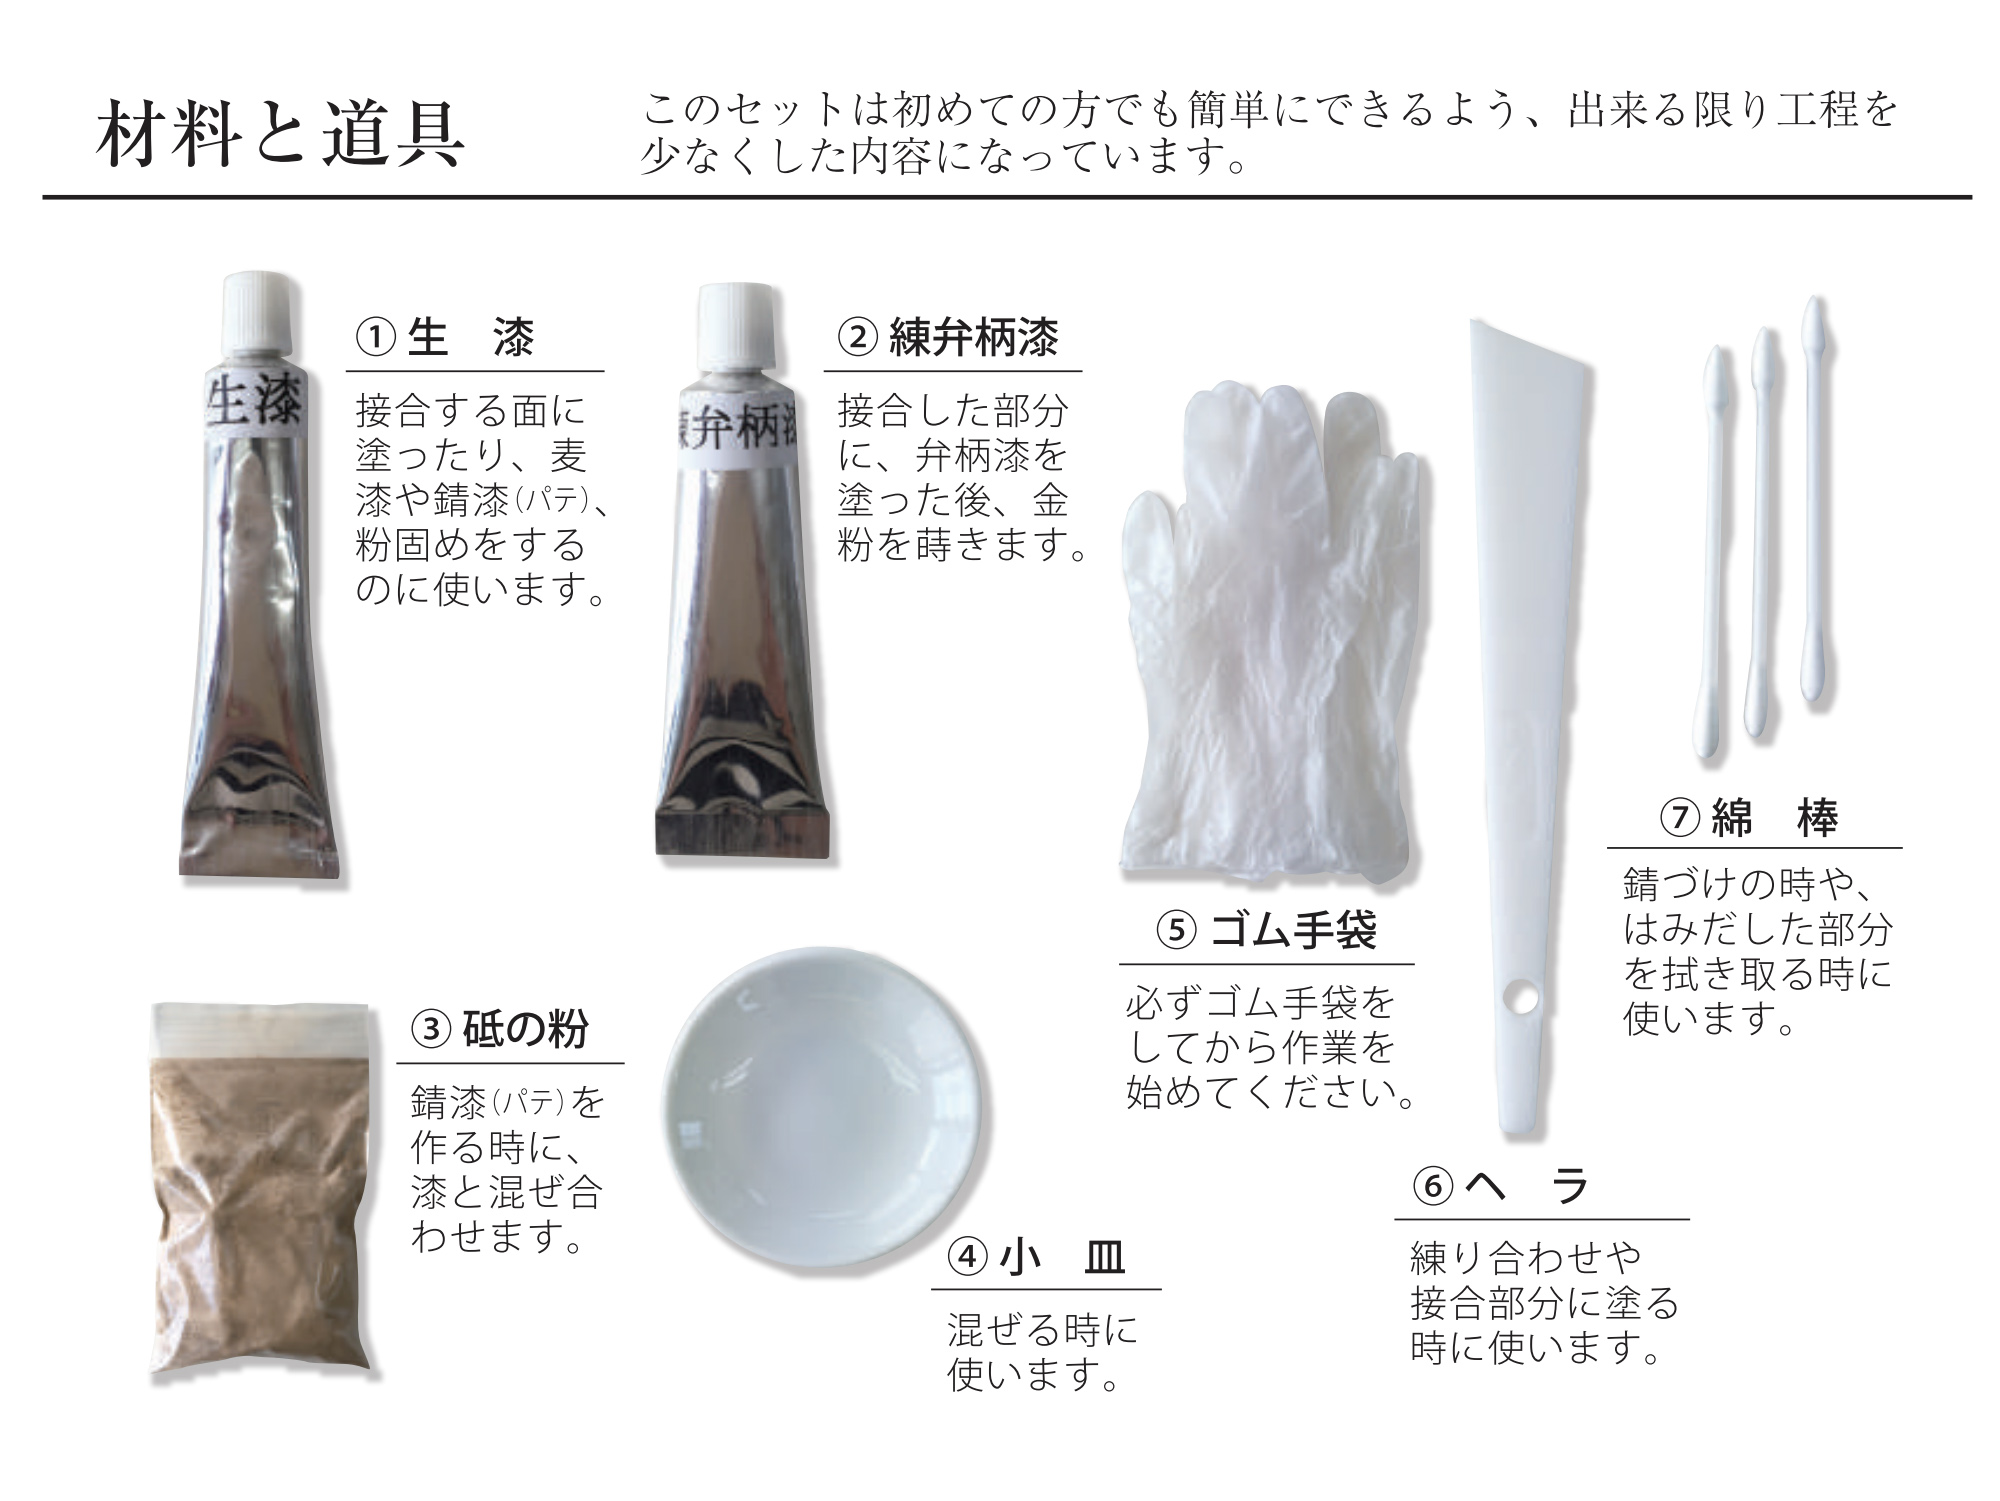 Minowa Japanisch DYI Kintsugi Kit Keramik Gold Reparatur Inc Real Gold 2